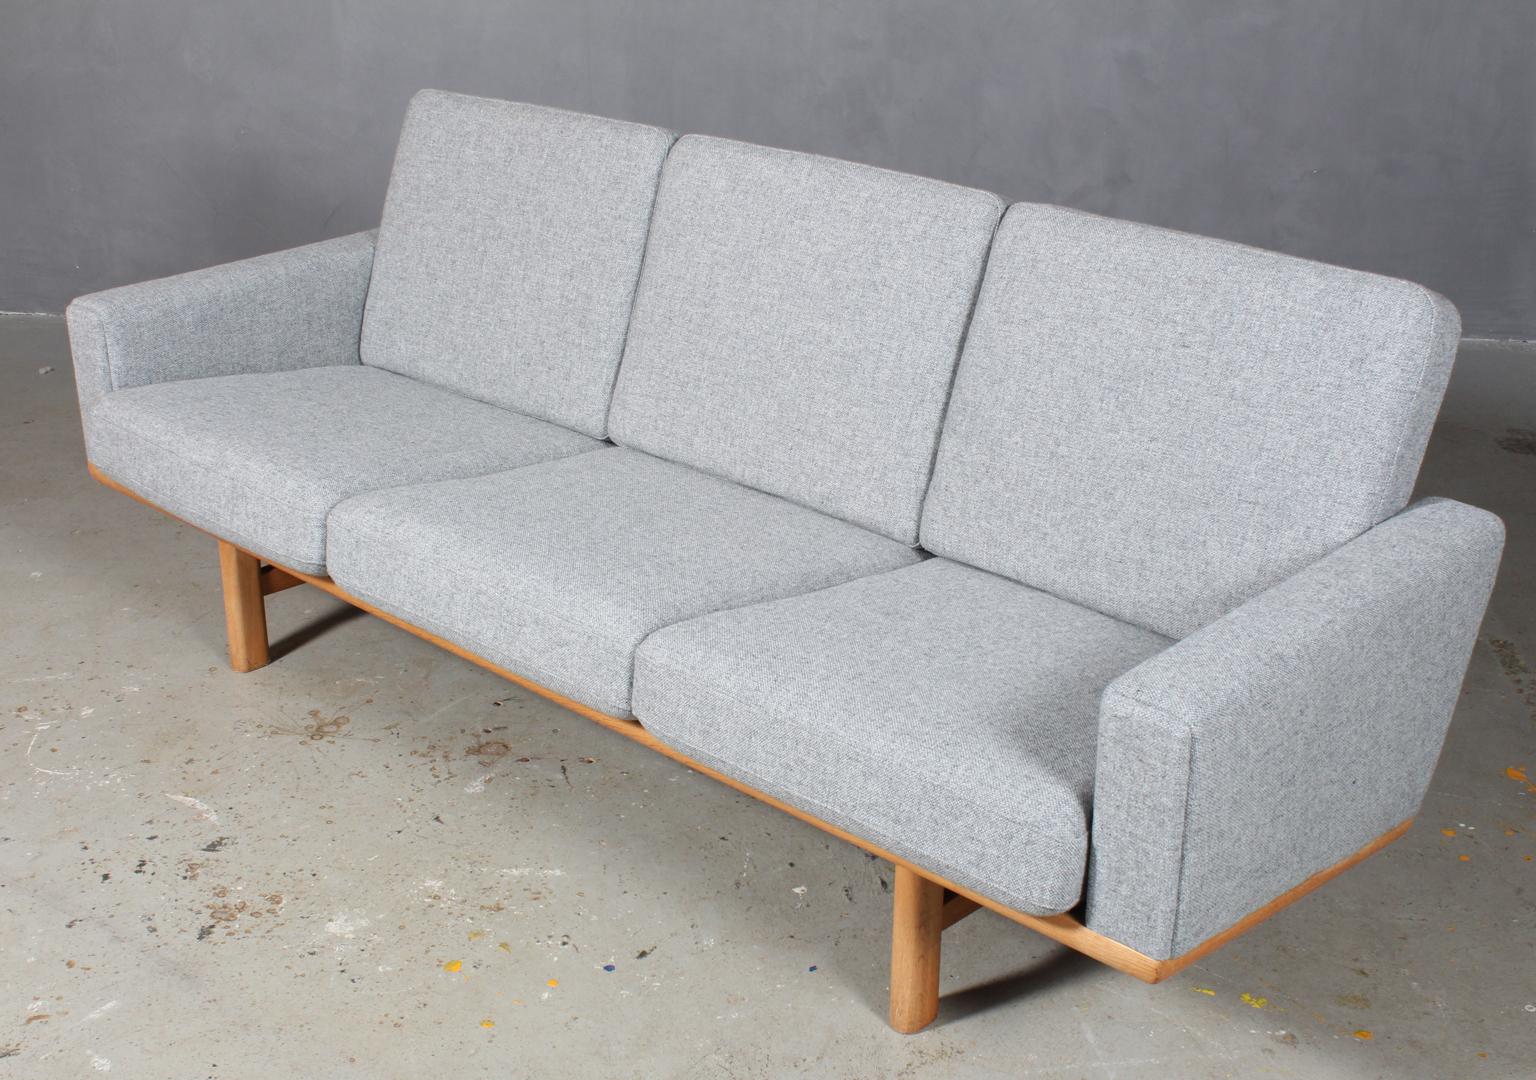 Hans J. Wegner three-seat sofa new upholstered with Hallingdal from Kvadrat.

Original Epeda cushions.

Frame in solid oak.

Model 236/3, produced by GETAMA.